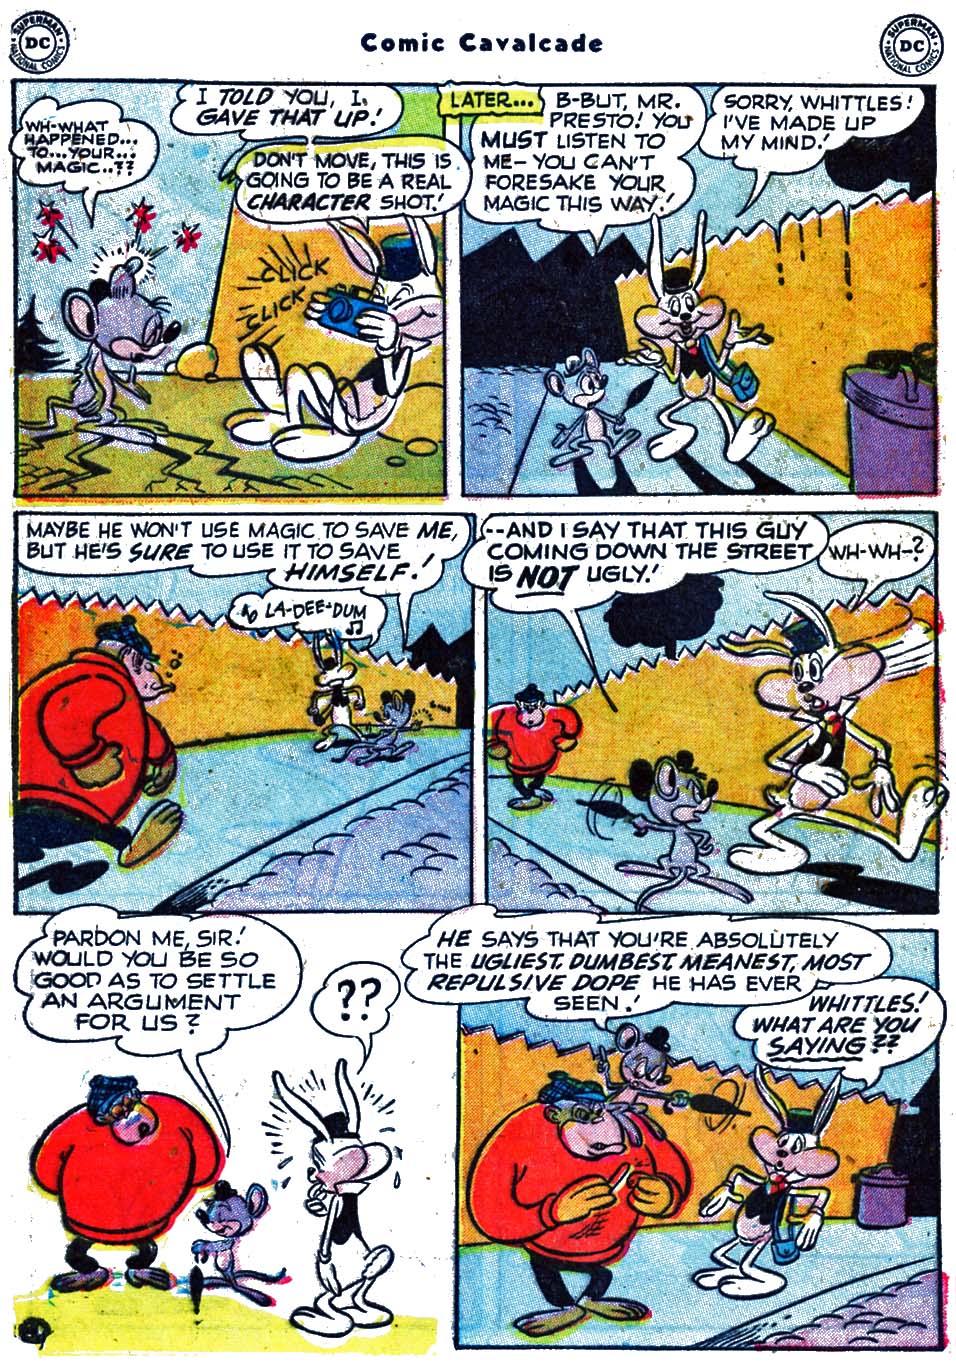 Comic Cavalcade issue 47 - Page 24